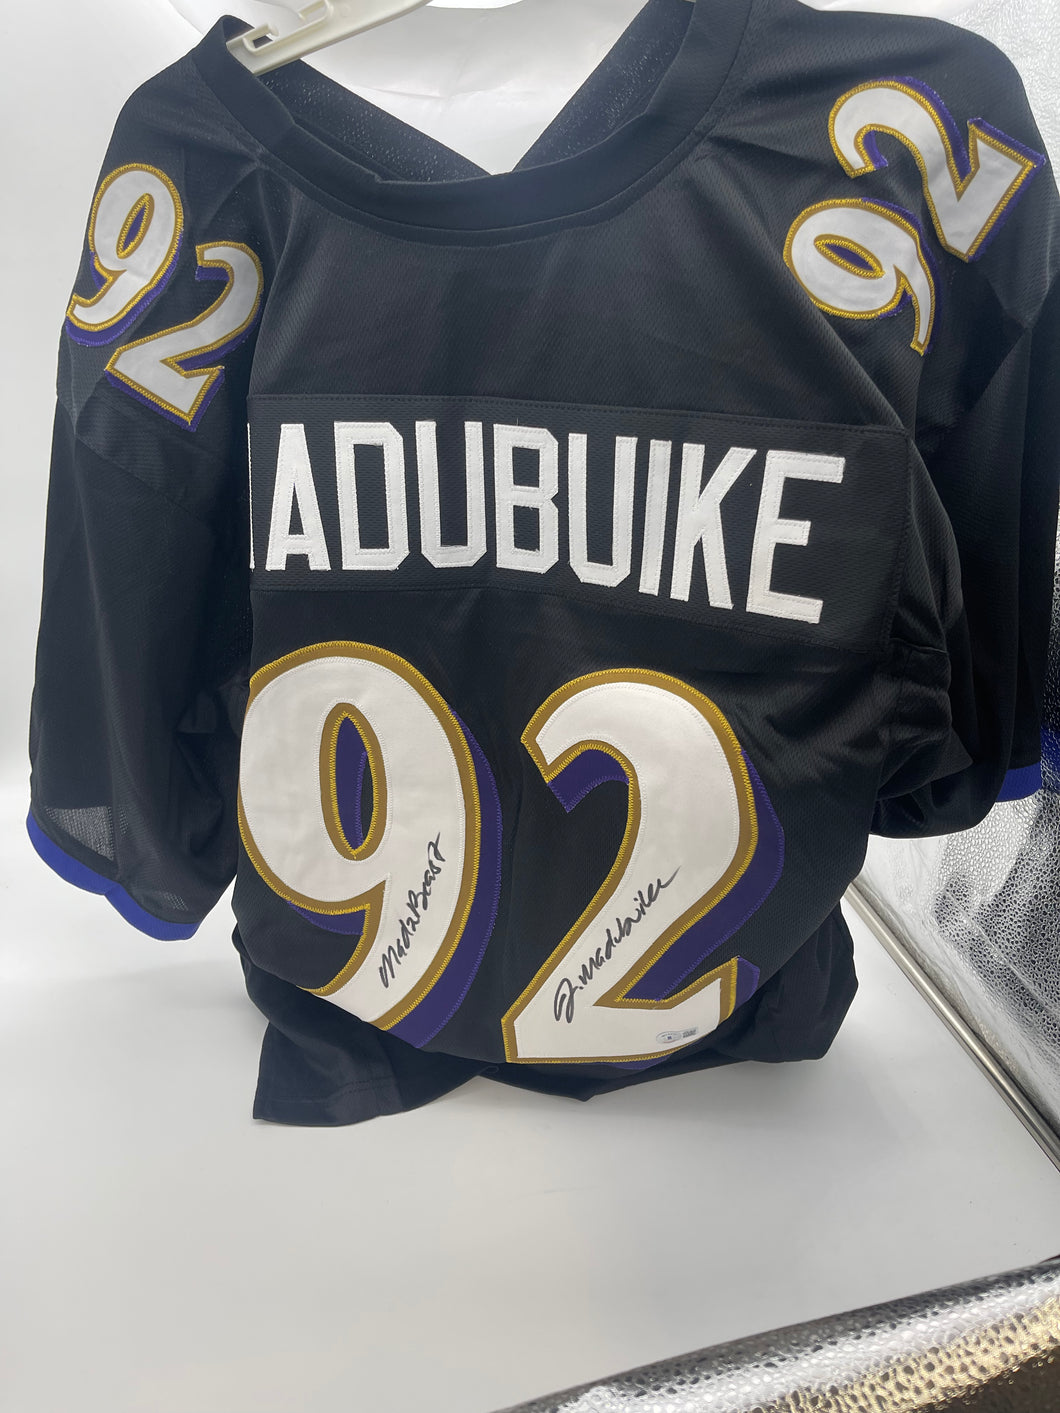 Justin Madubuike signed jersey